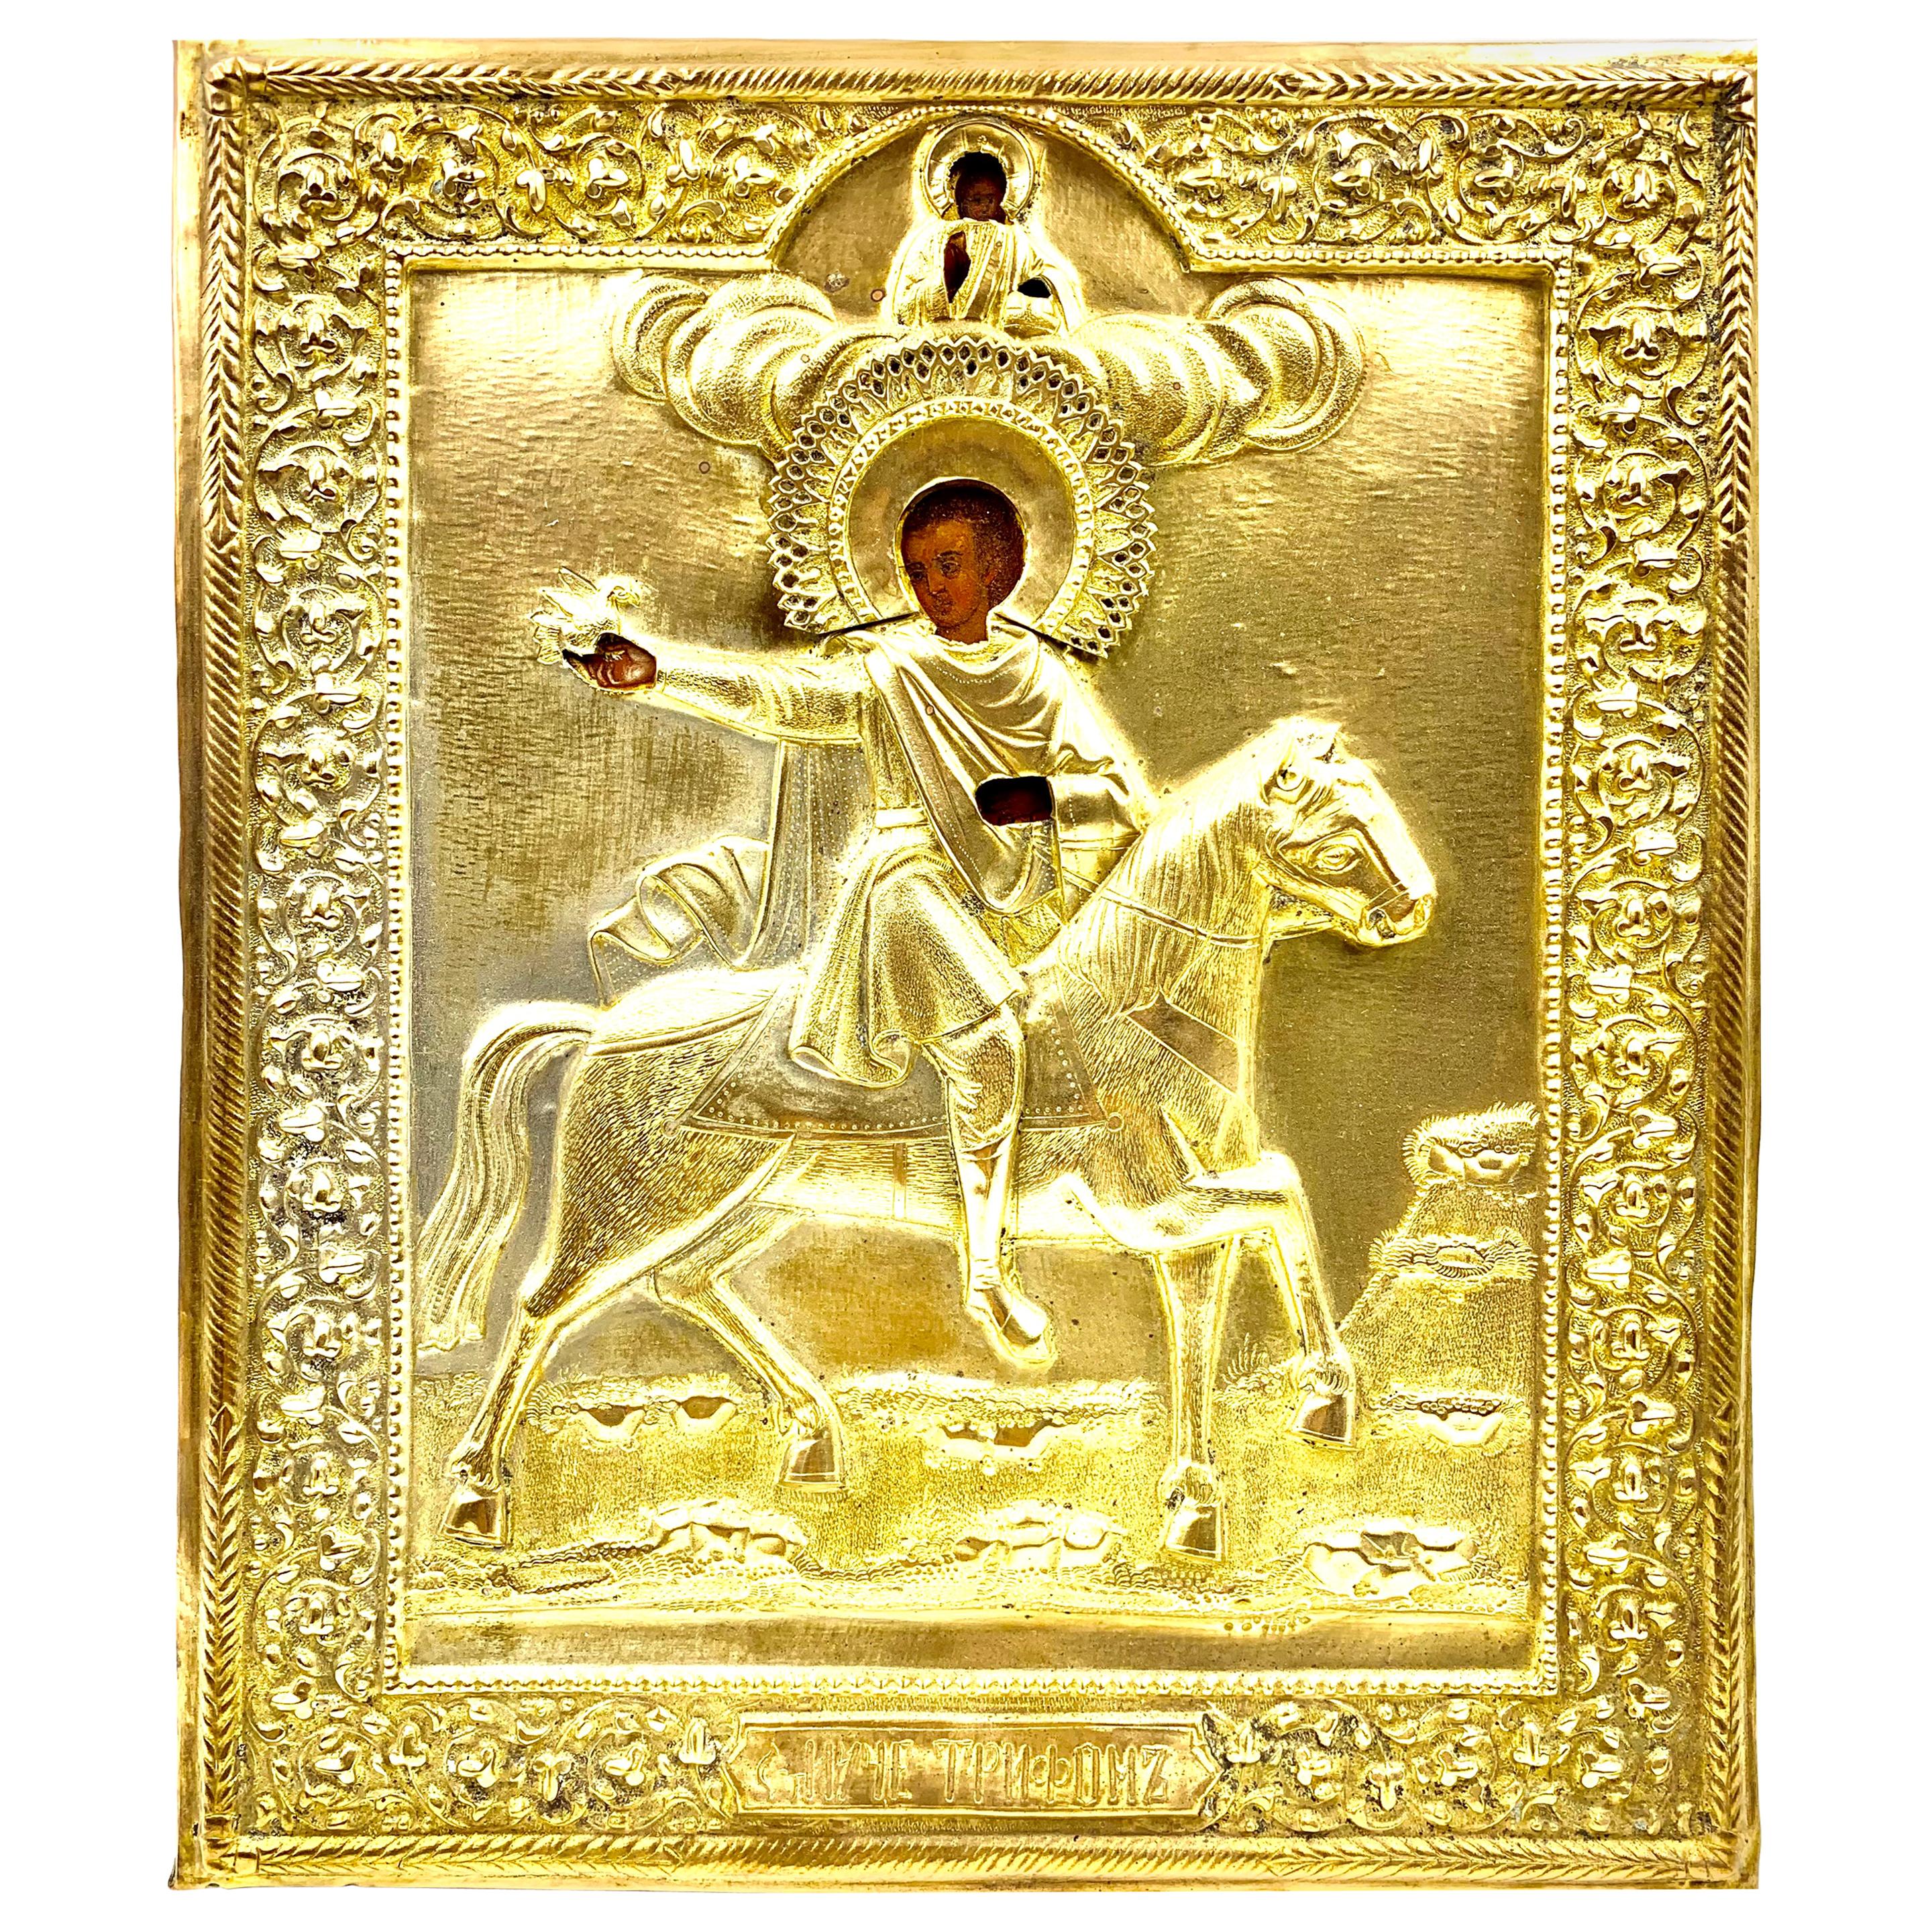 Rare Antique Russian Icon Saint Tryphon, Patron Saint of Wine Growers, Falconers